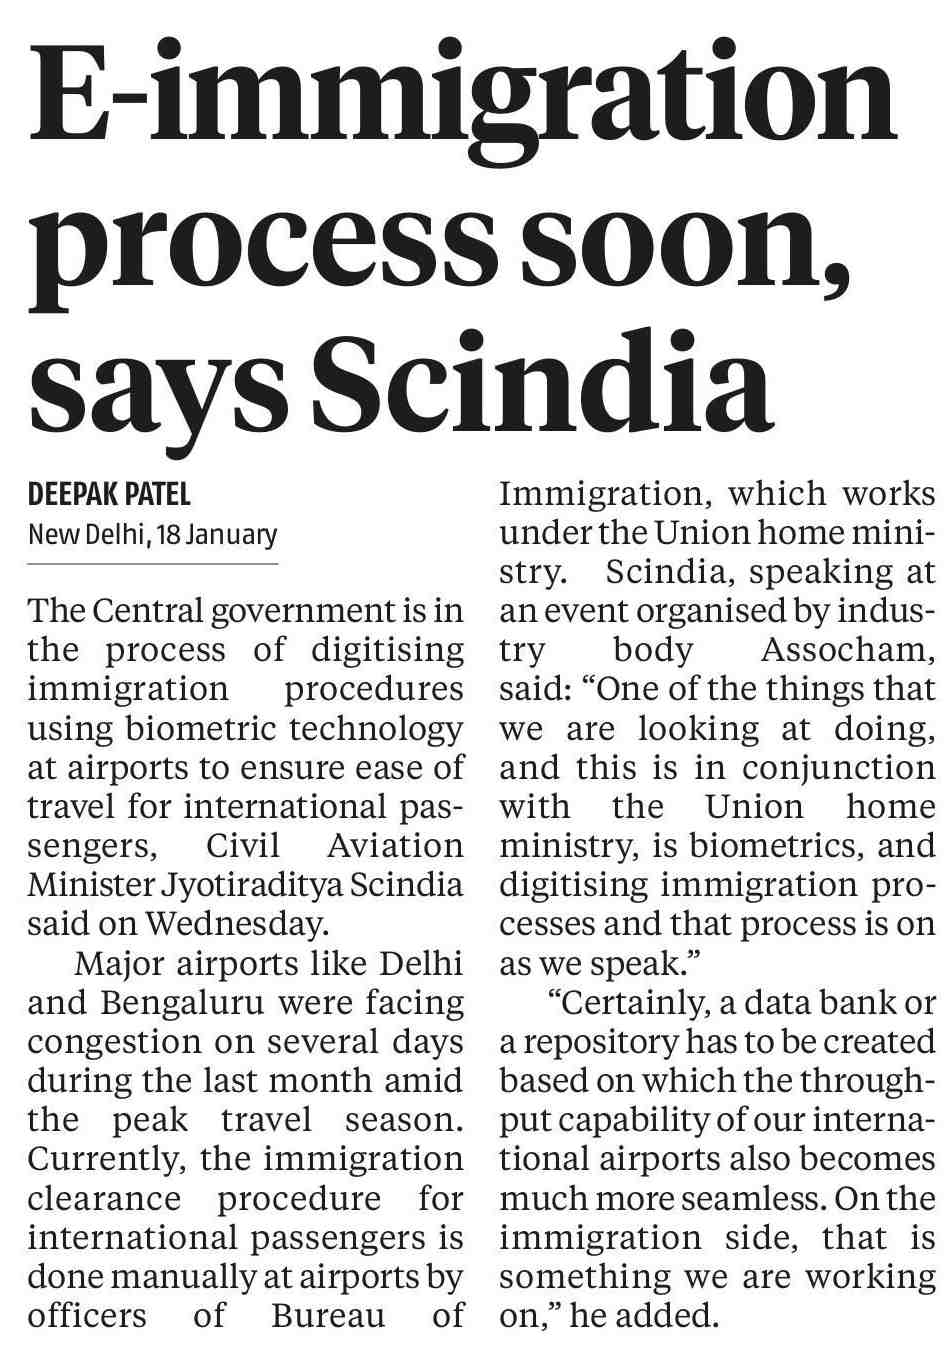 E-immigration process soon, says Scindia